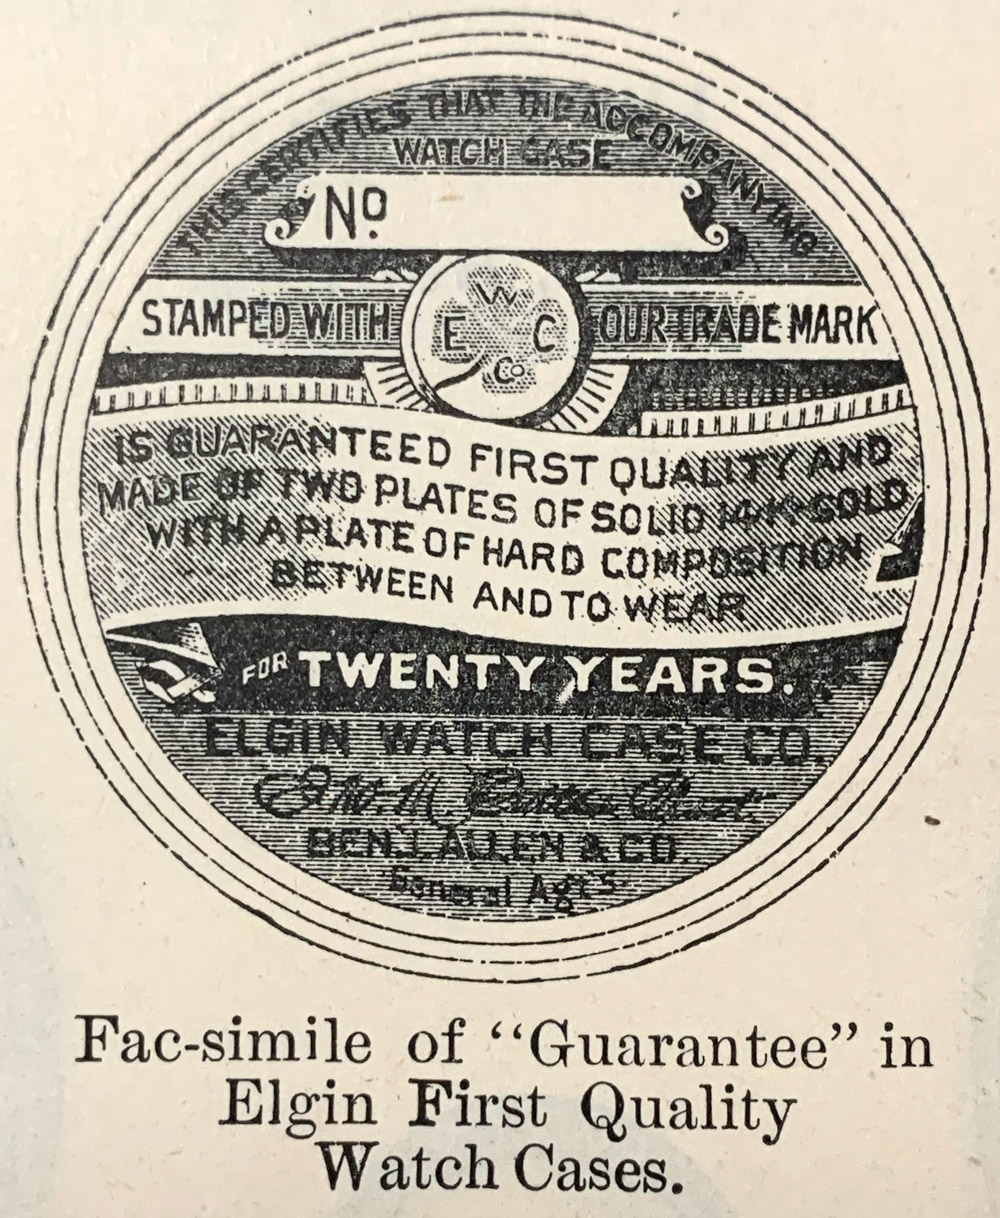 Elgin Watch Case Co. Image